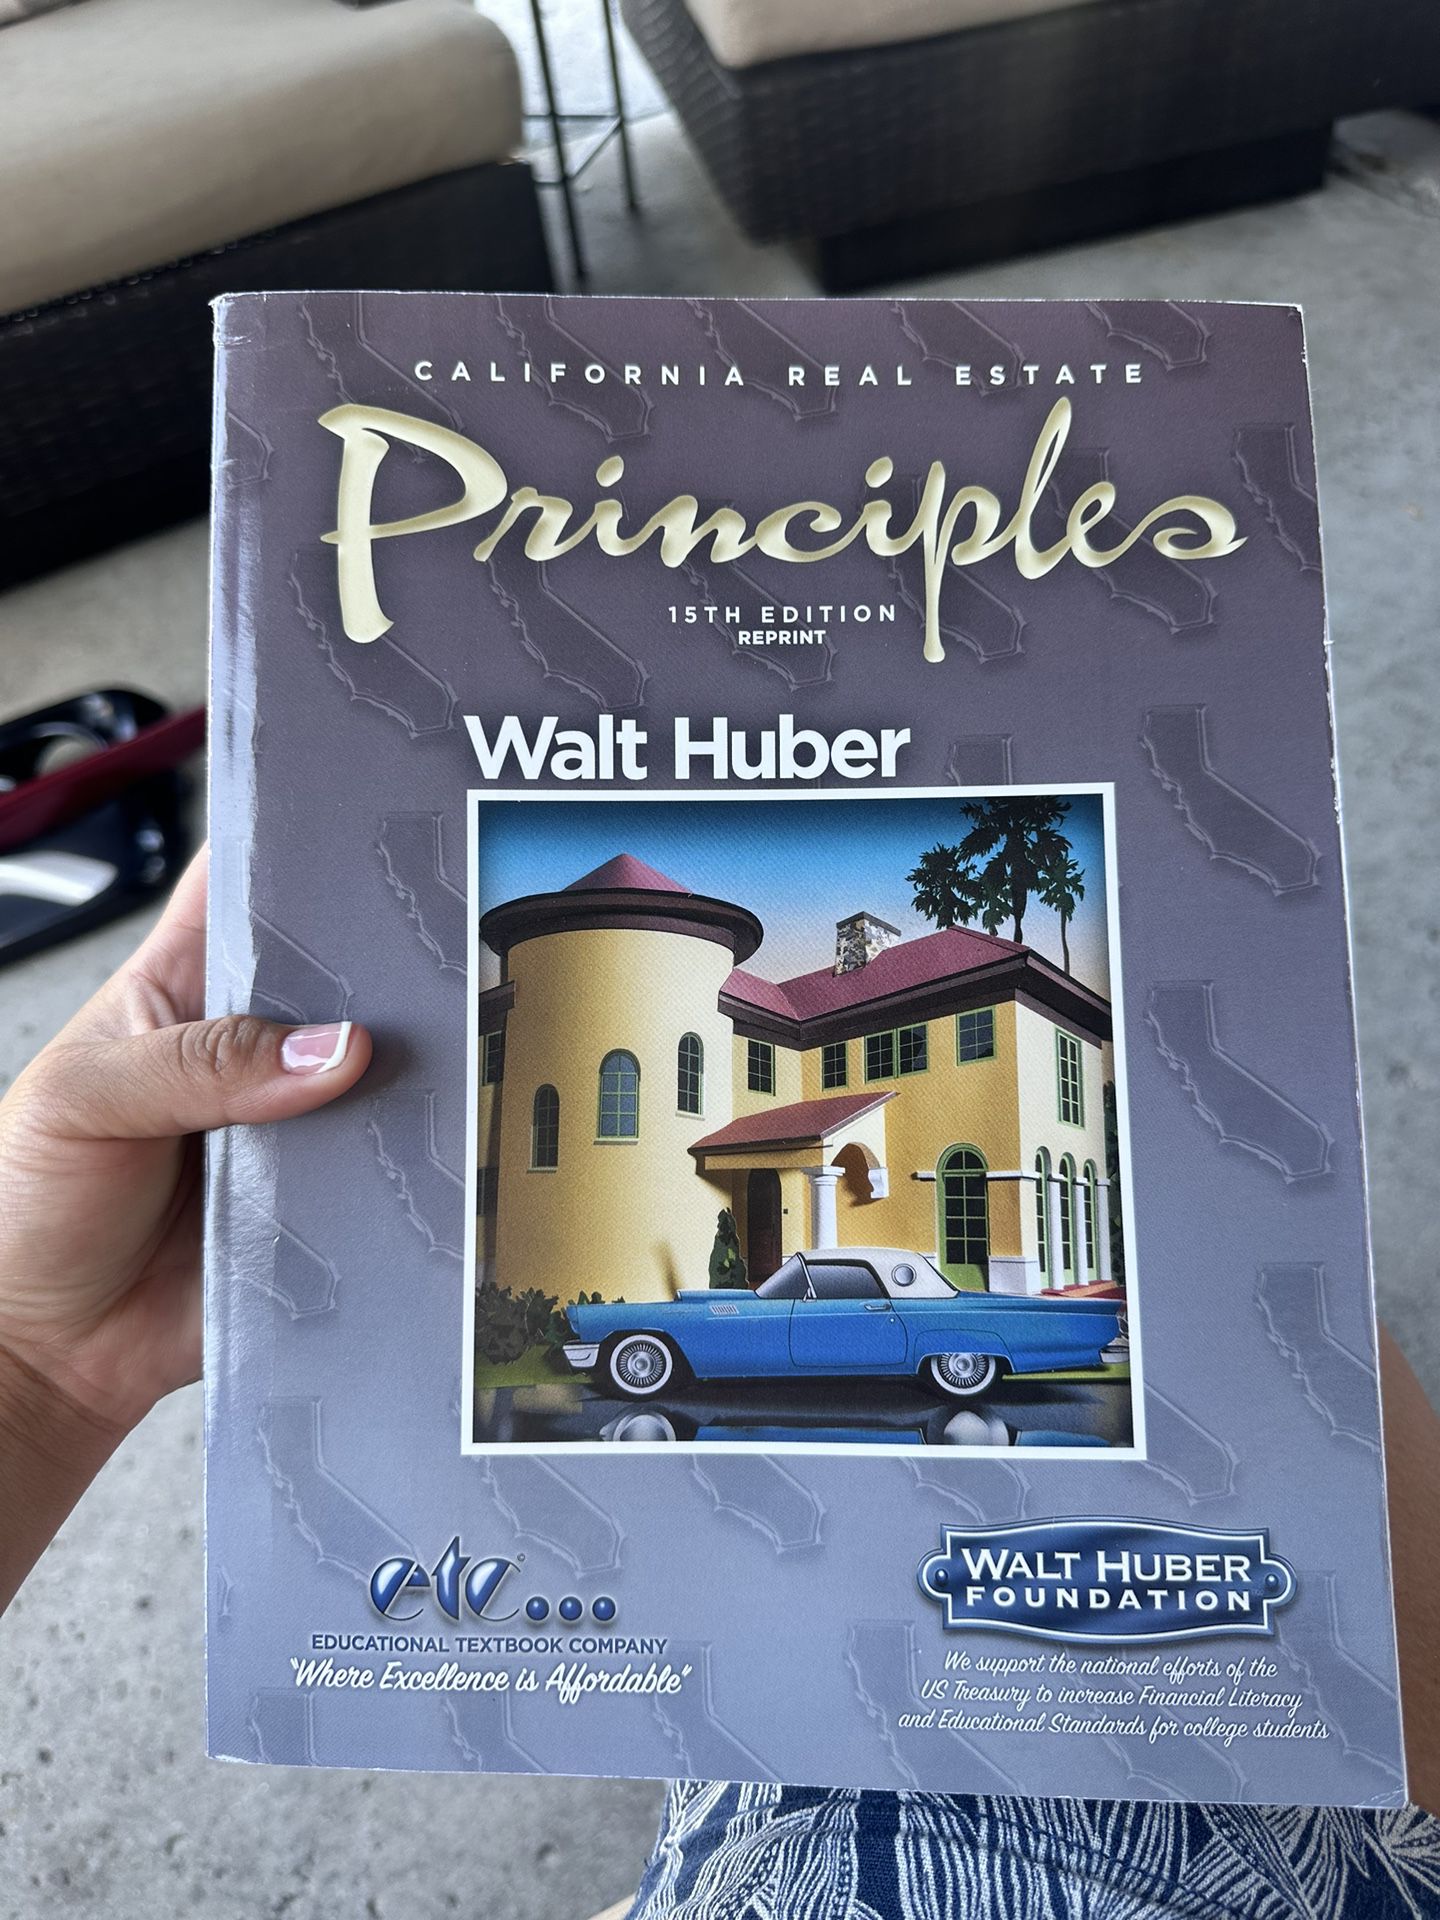 California Real Estate Principles 15th Edition Walt Huber